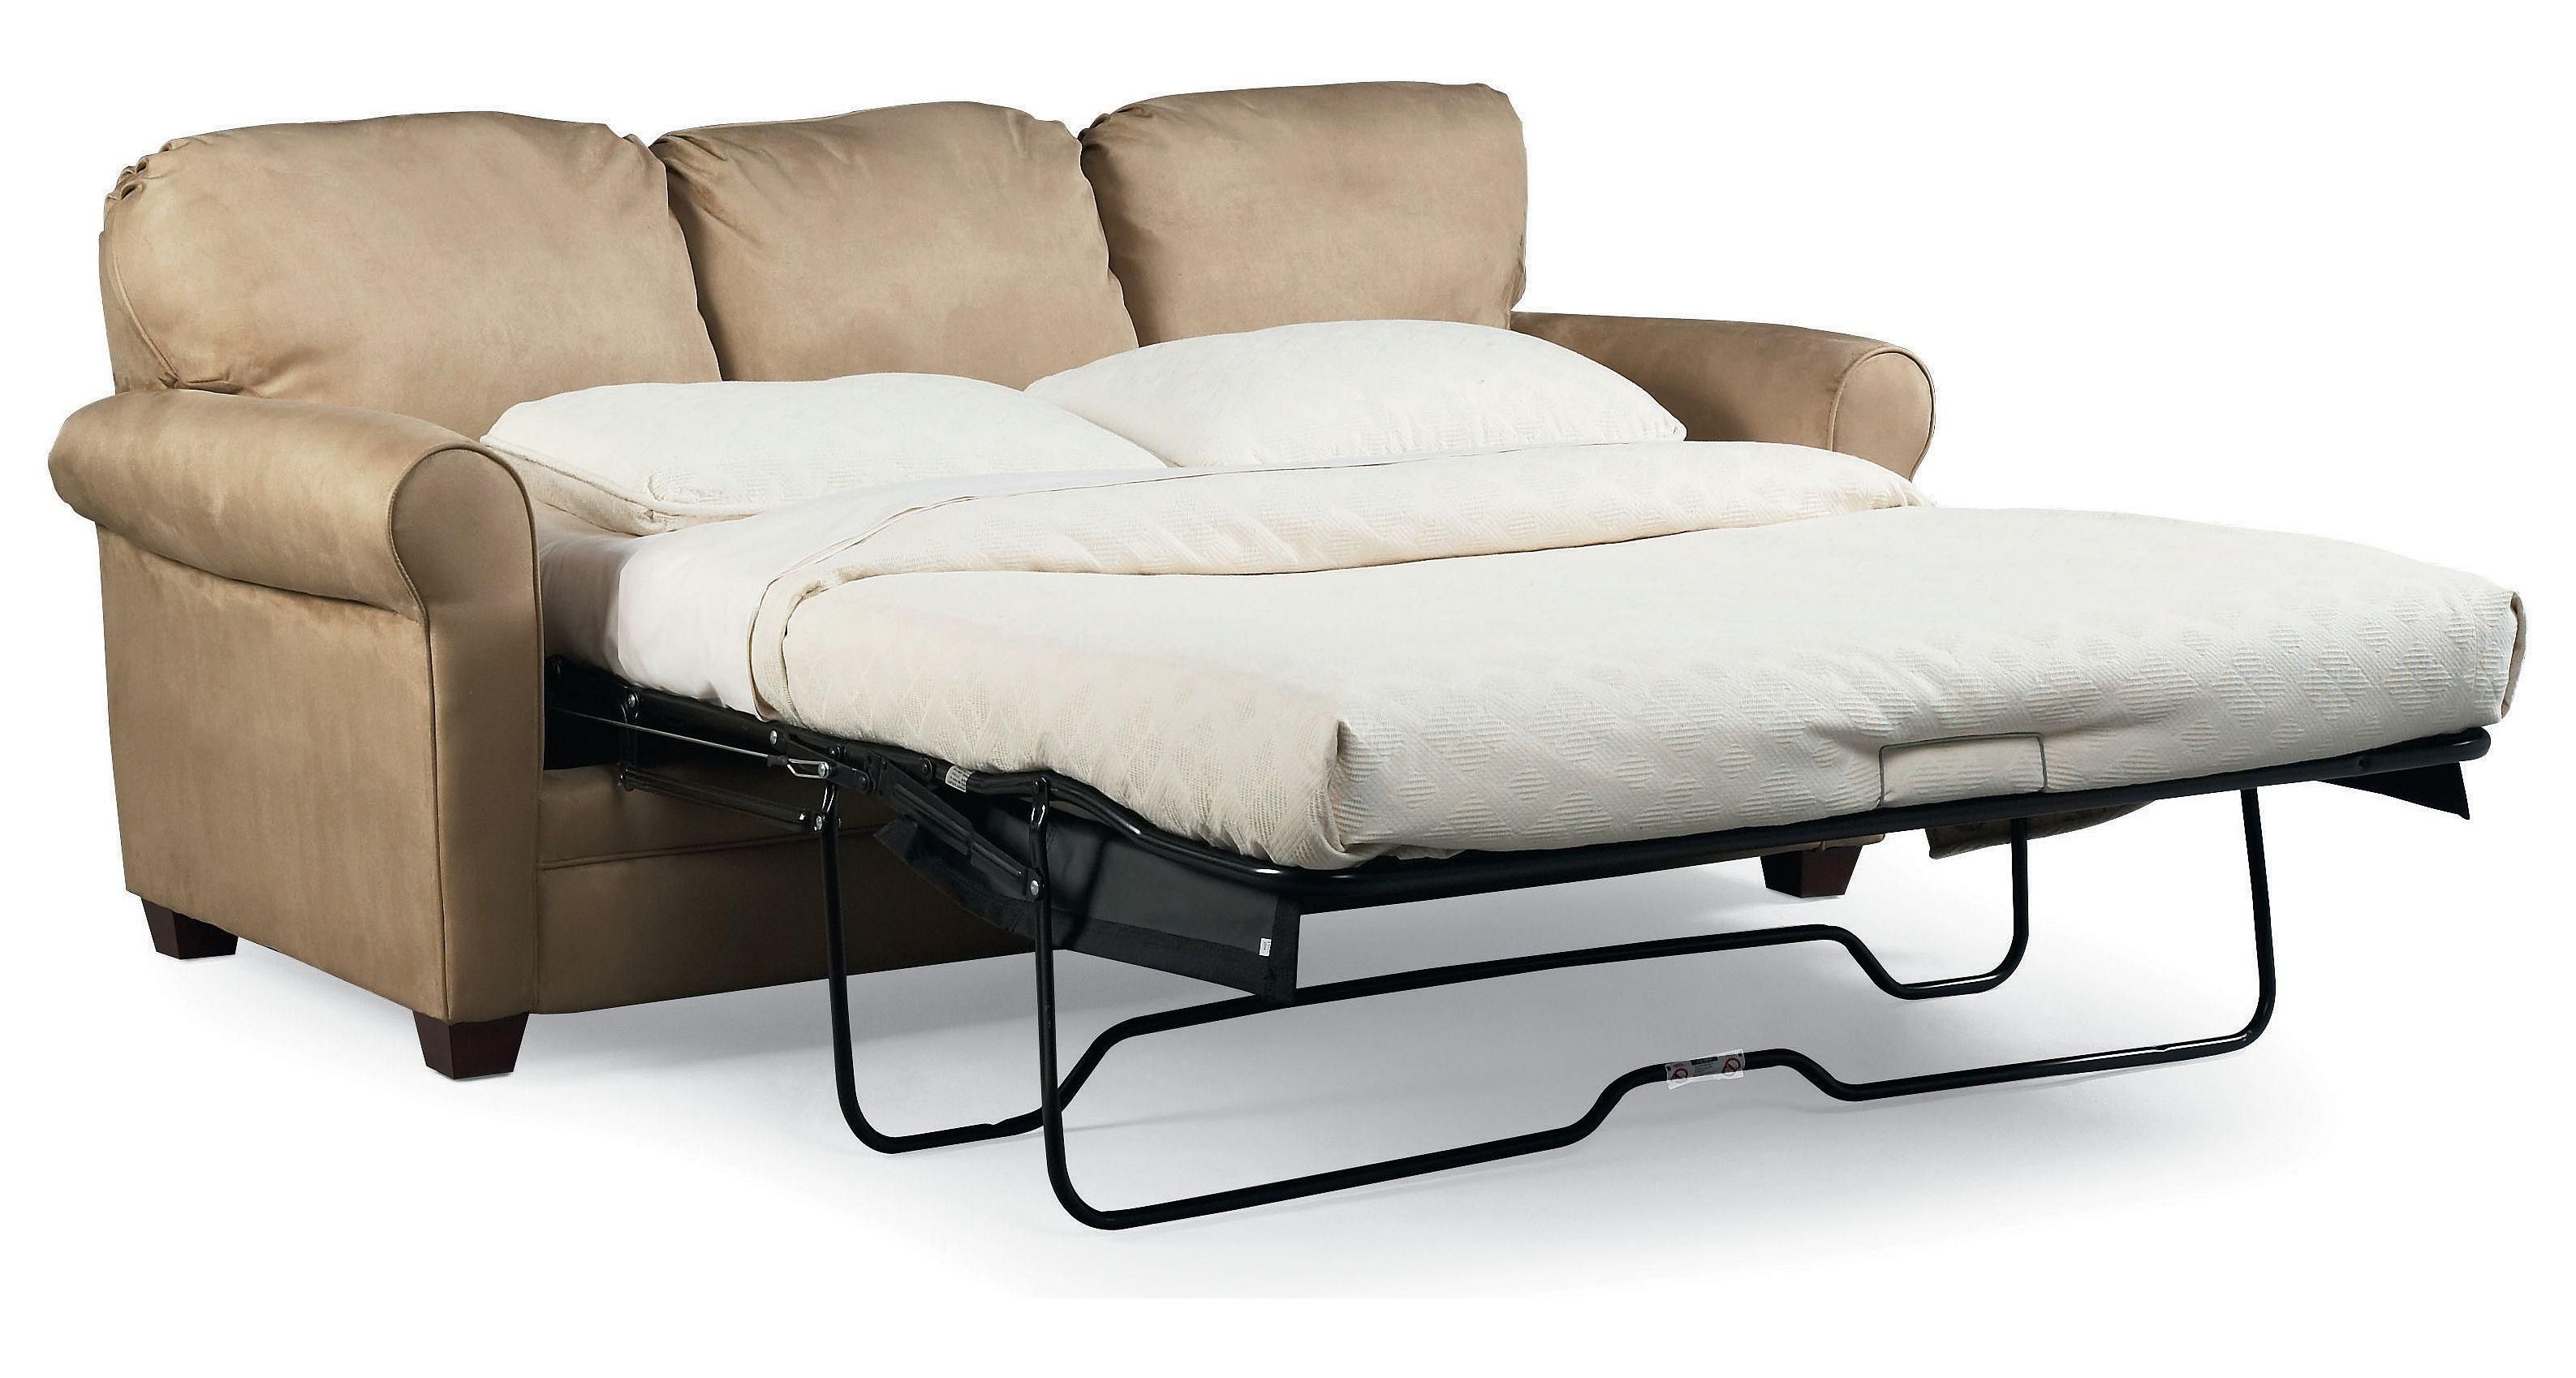 Sofas Center : Sleeper Sofa Leather Sectional Wonderful On Within Craigslist Sleeper Sofas (View 11 of 20)